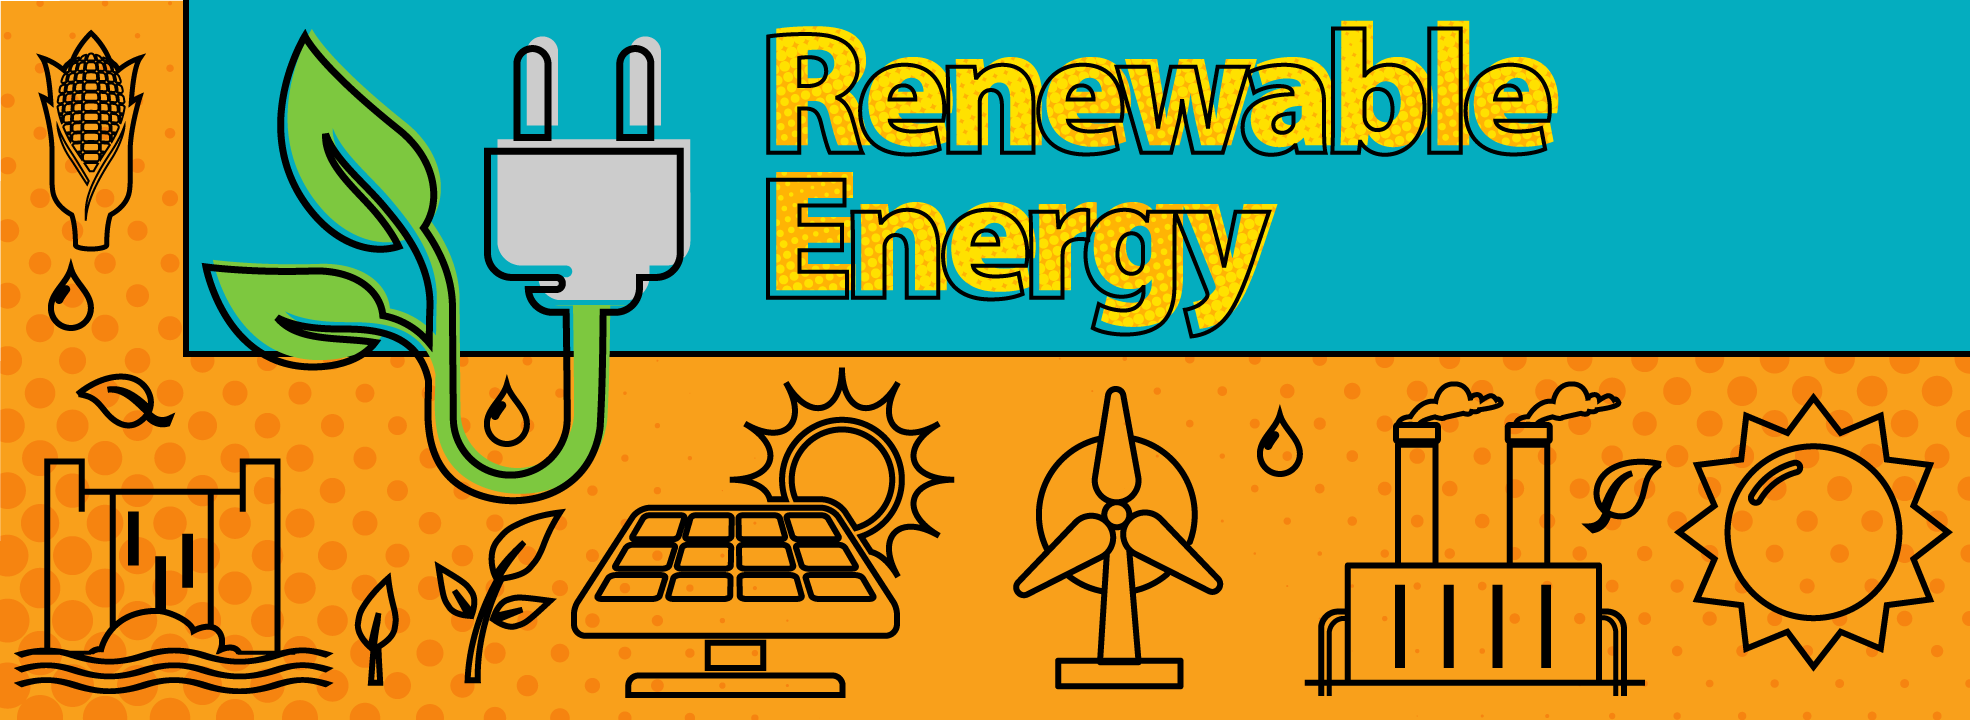 Renewable energy solar wind biomass geothermal hydropower